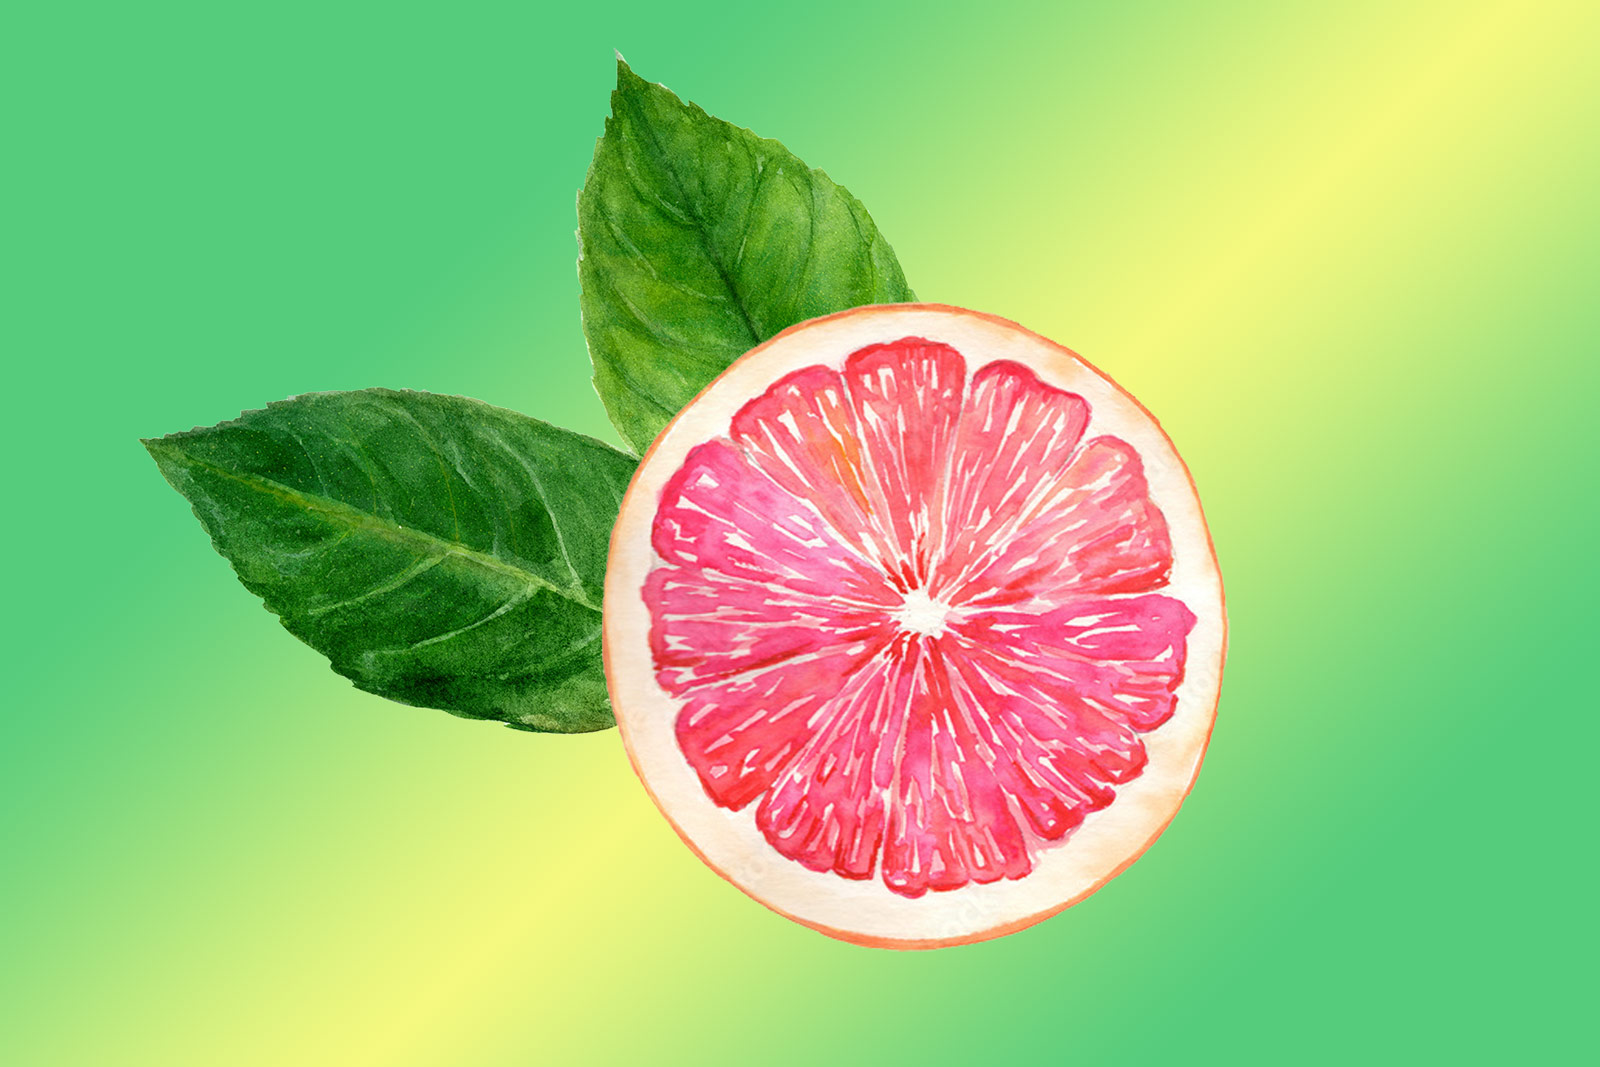 Grapefruit - how does it affect blood sugar?